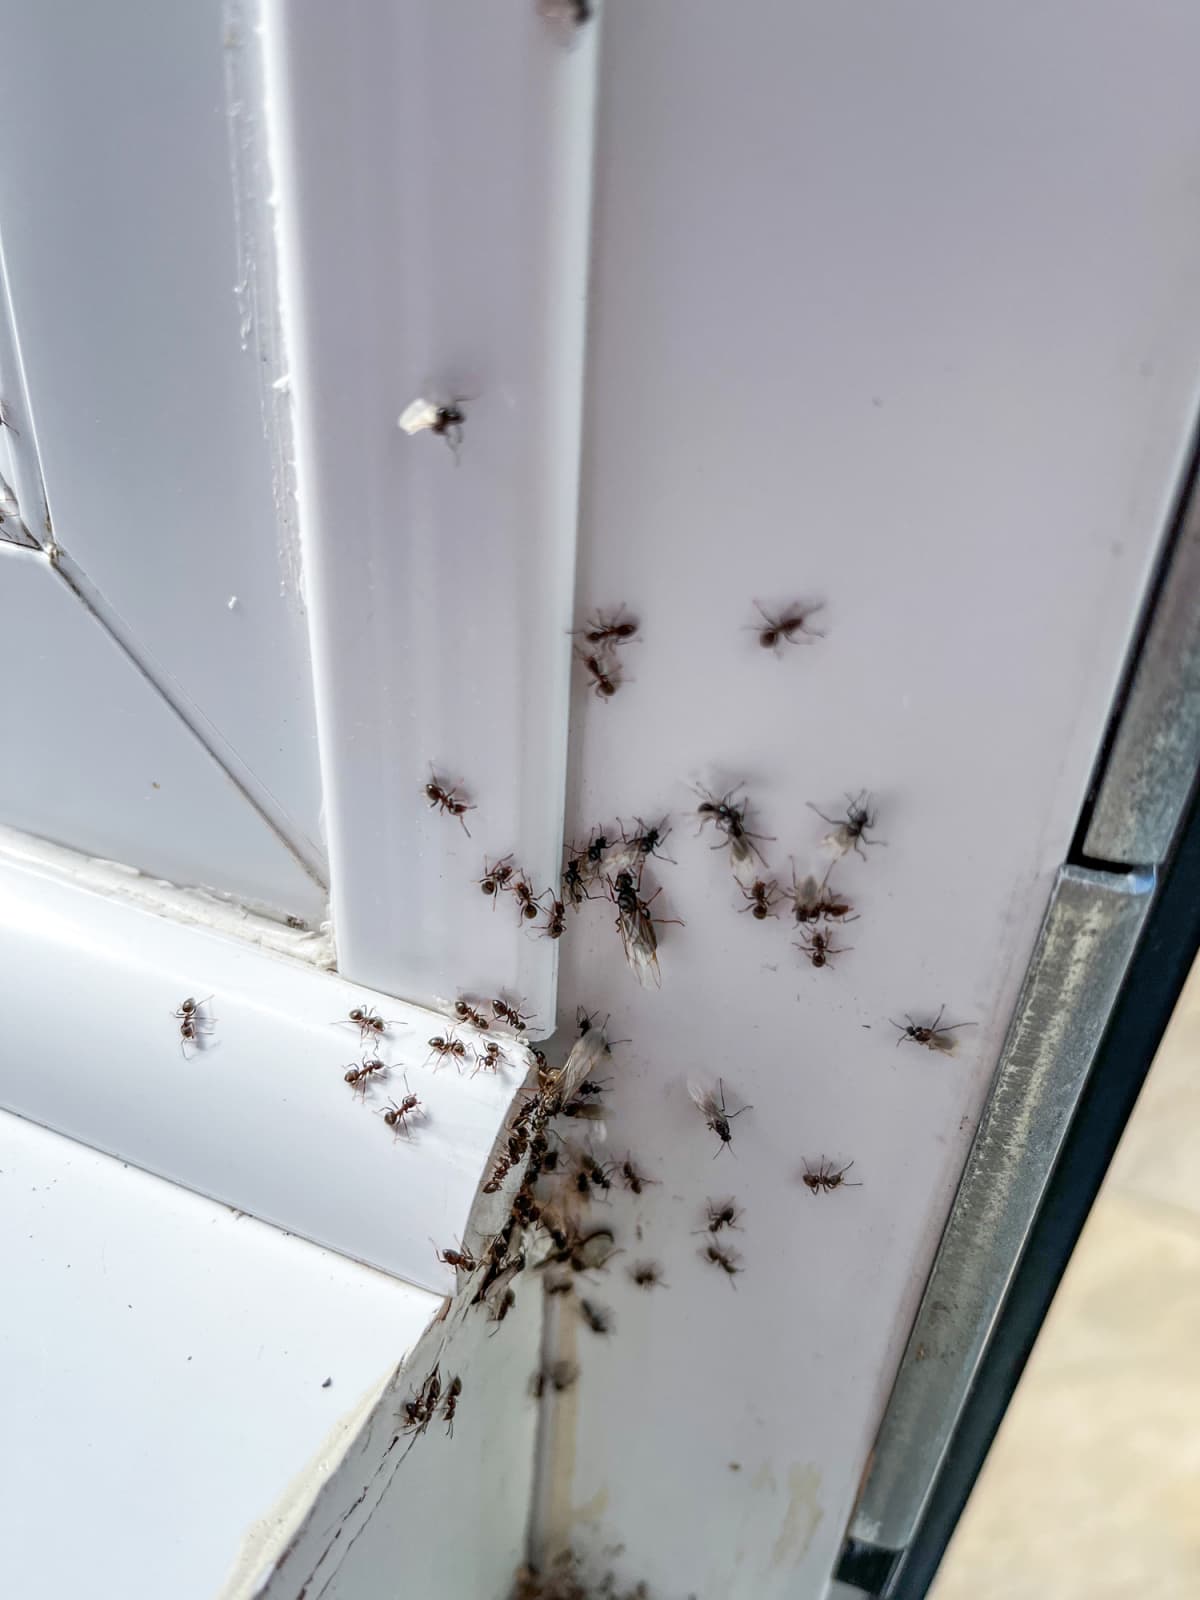 Flying ants on windowsill